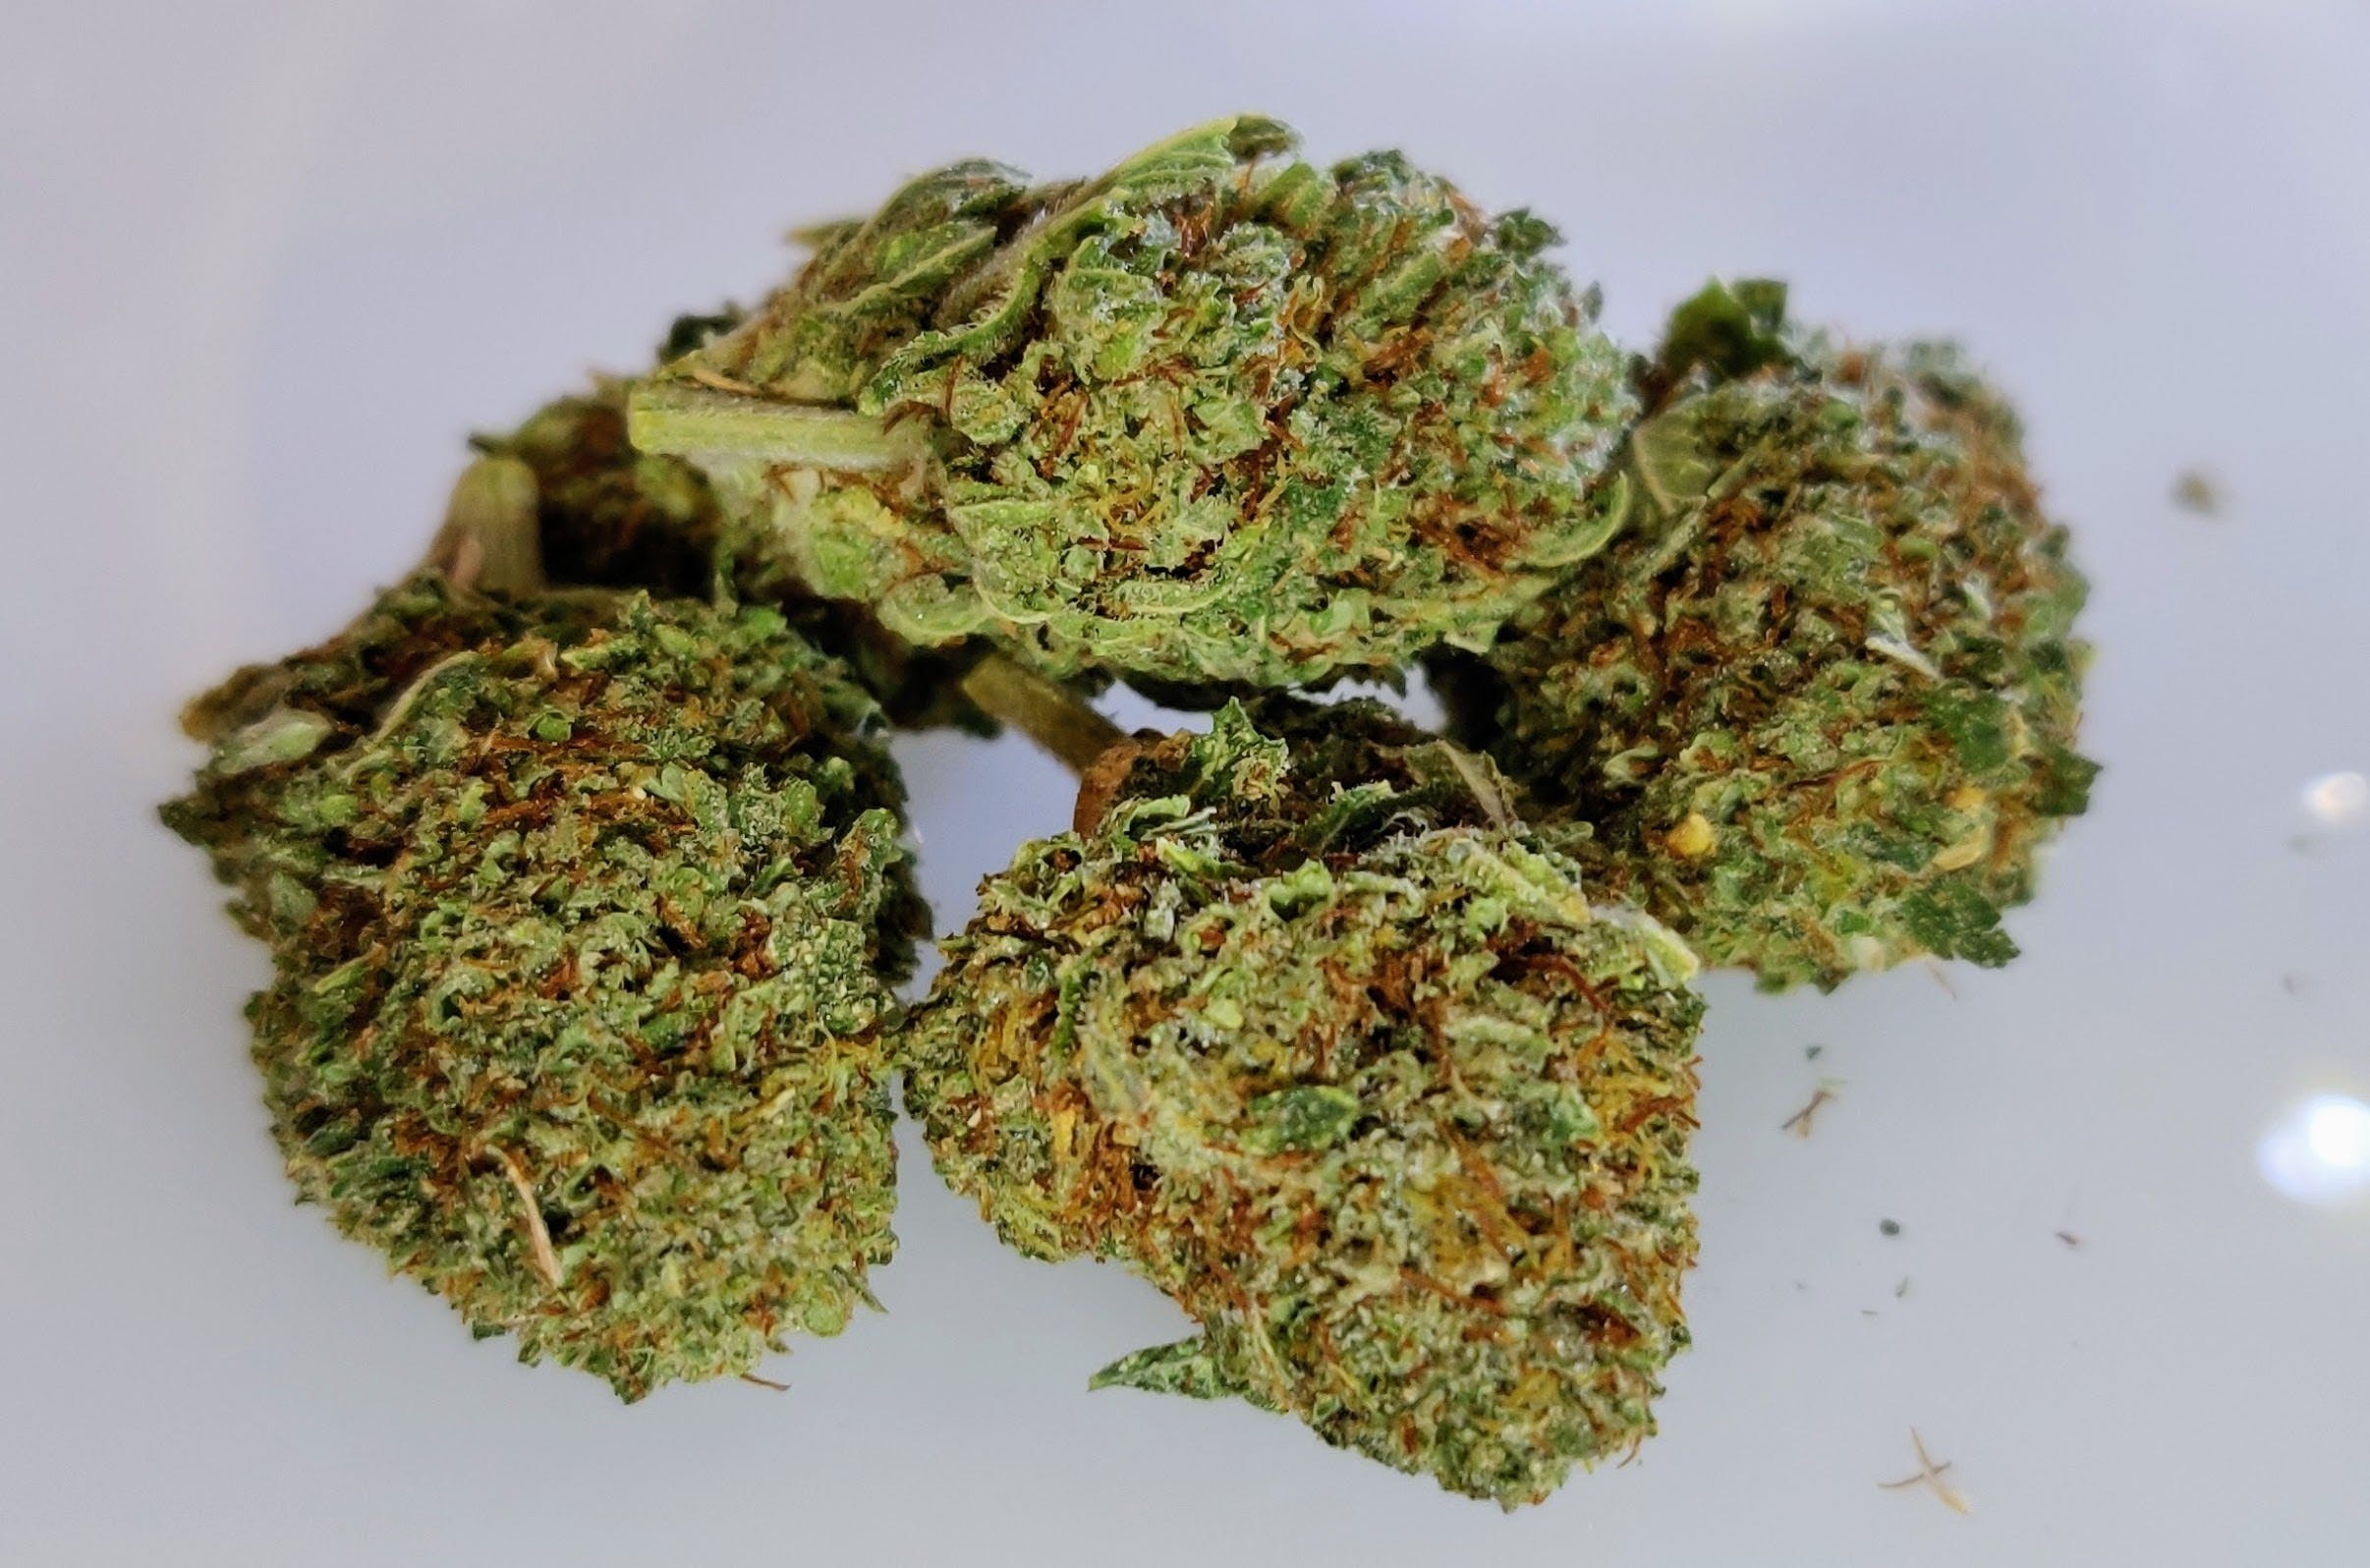 marijuana-dispensaries-grow-life-in-colorado-springs-kong